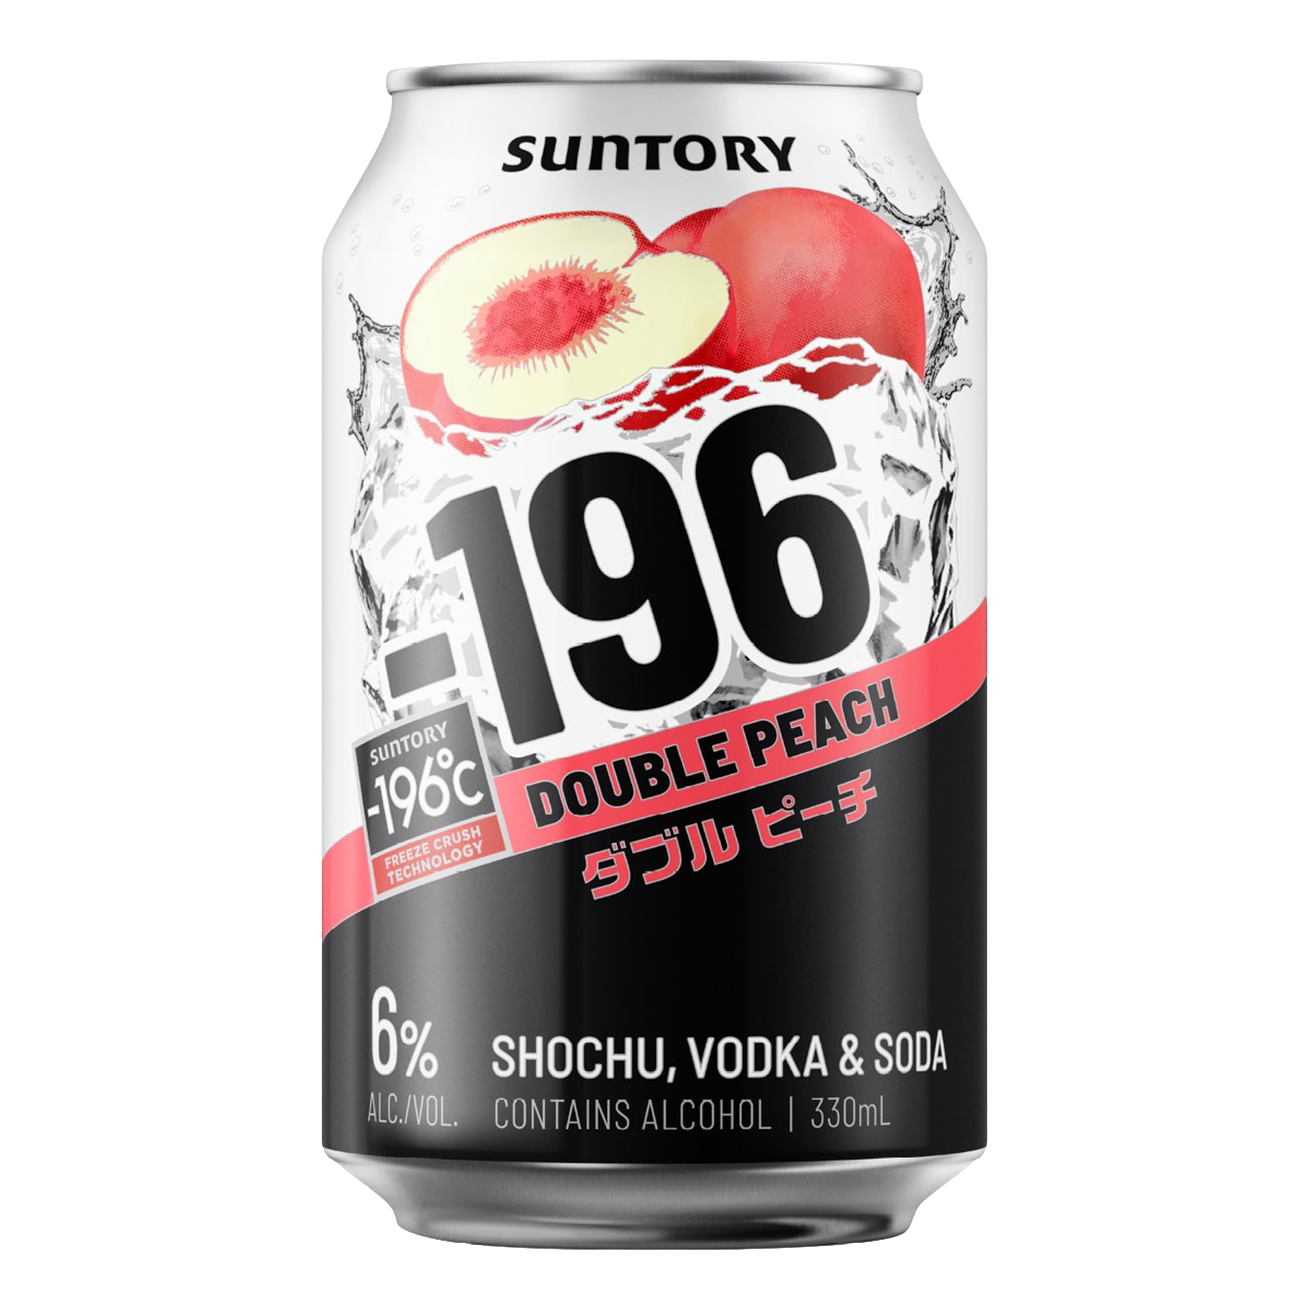 Suntory -196 Double Peach Shochu Vodka Soda 330ml Can Single